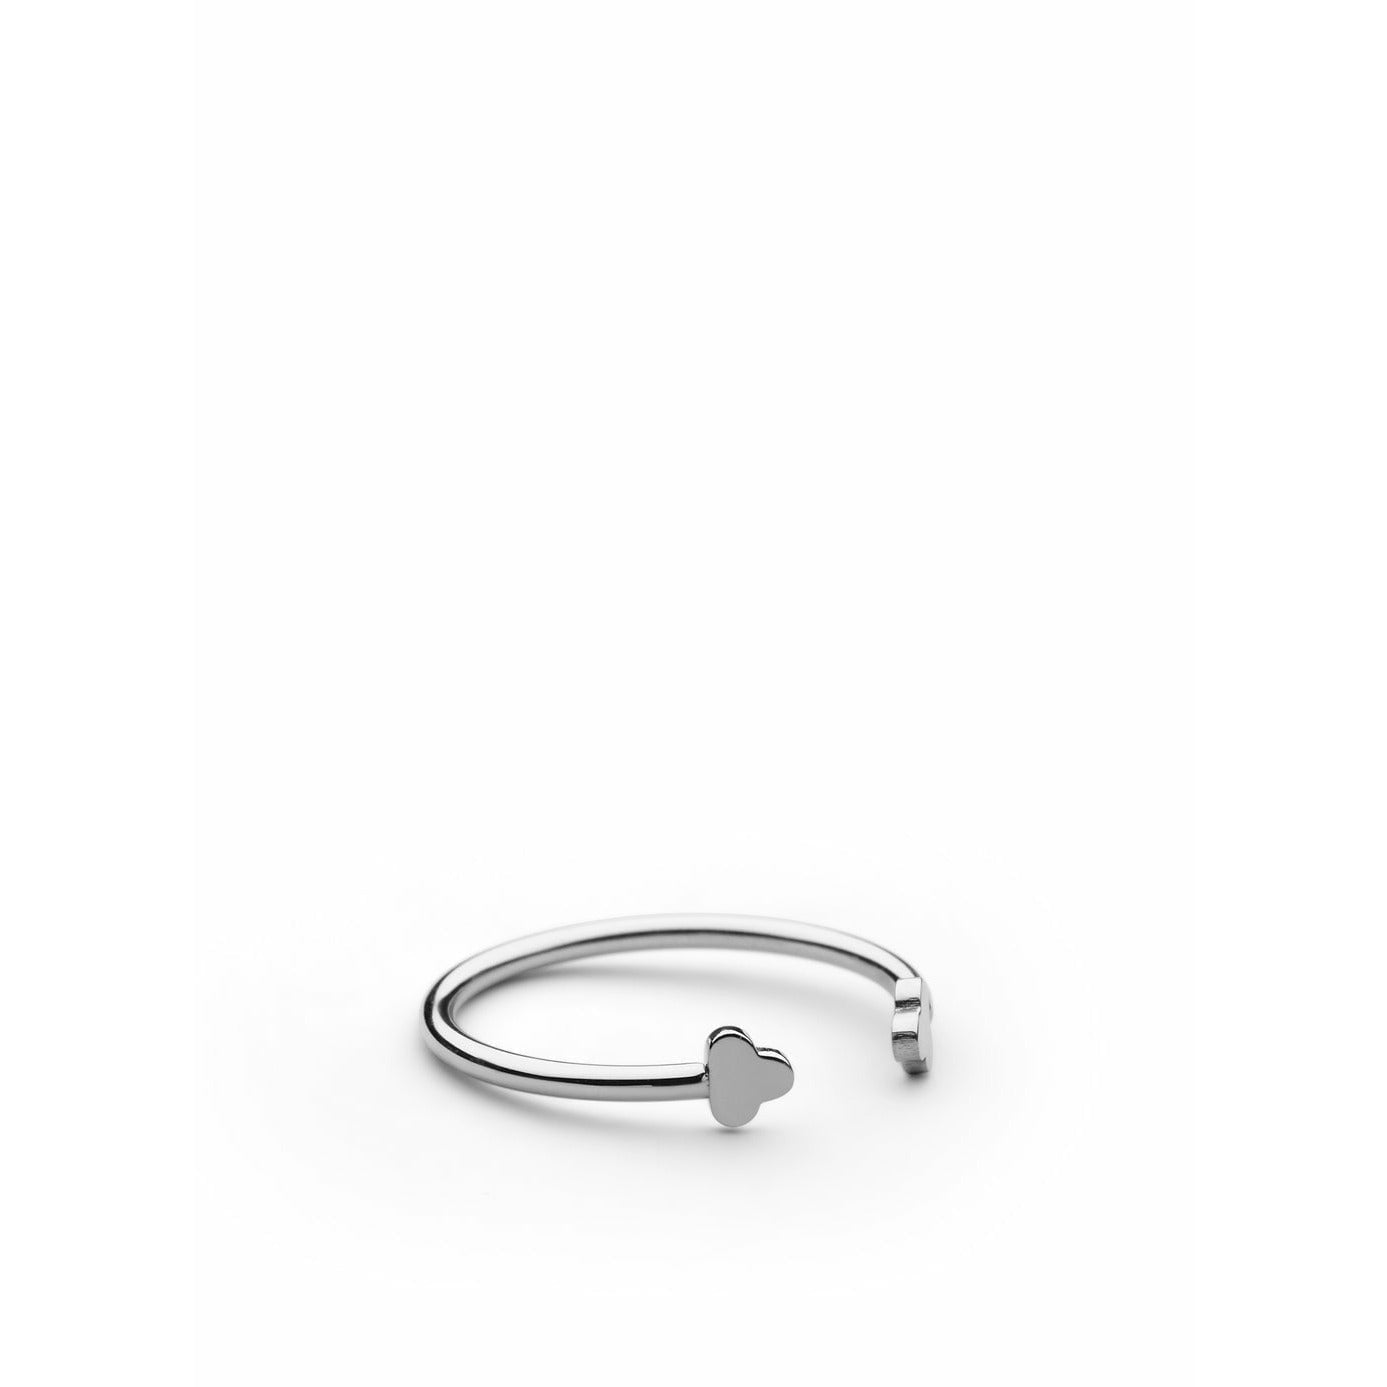 Skultuna Åben nøgle ringmedium poleret stål, Ø1,73 cm